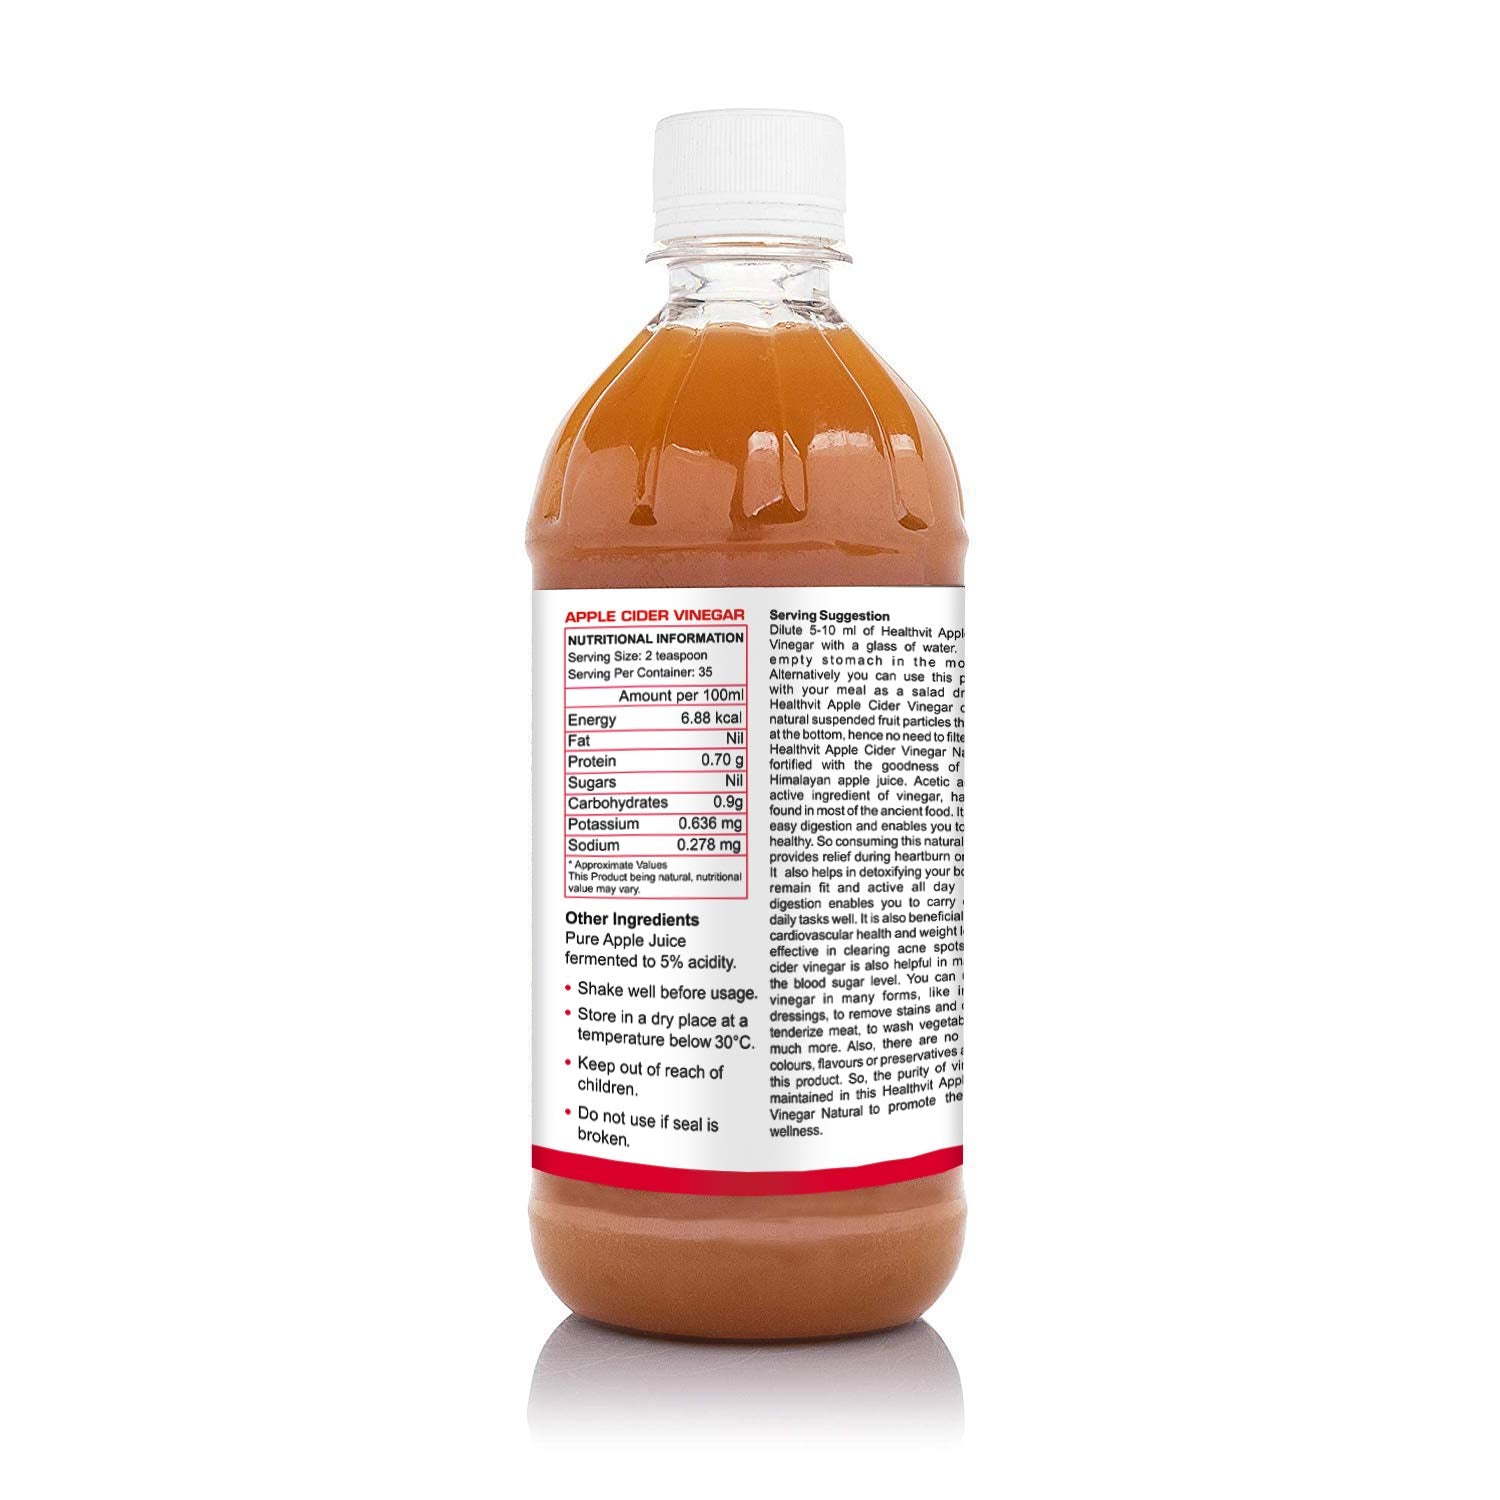 HealthVit Apple Cider Vinegar with Mother of Vinegar - Unfiltered, Organic, Weight Loss, Skin Health, Digestion, Energy Boost, Immunity - 500 ml